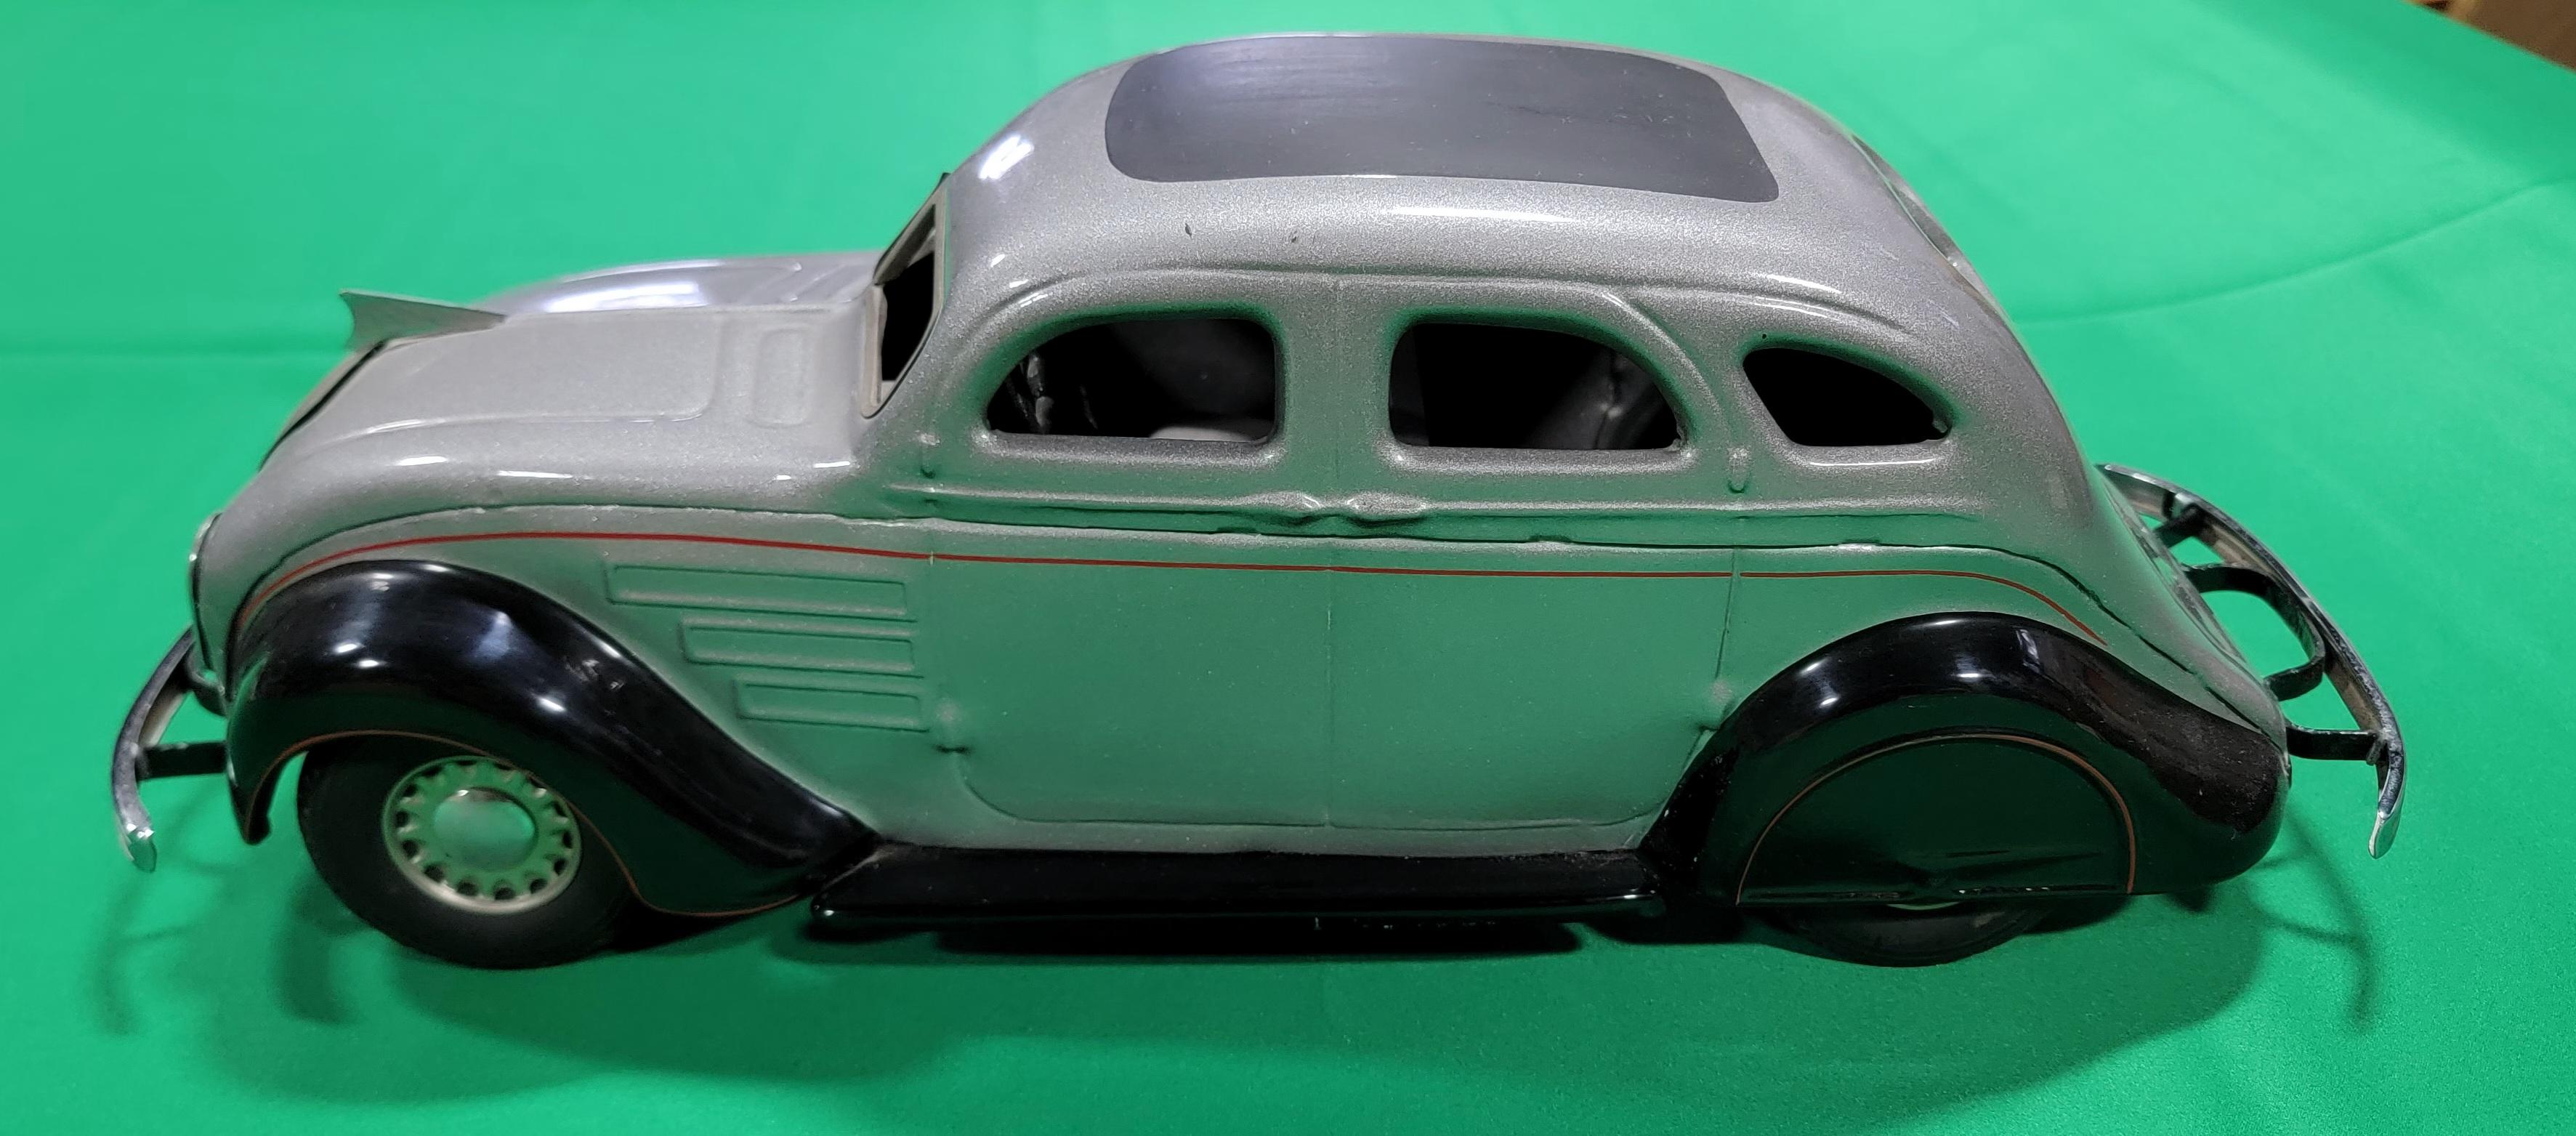 Restored Cor-Cor Pressed Steel Art Deco Toy Car 1934 Chrysler Airflow 6